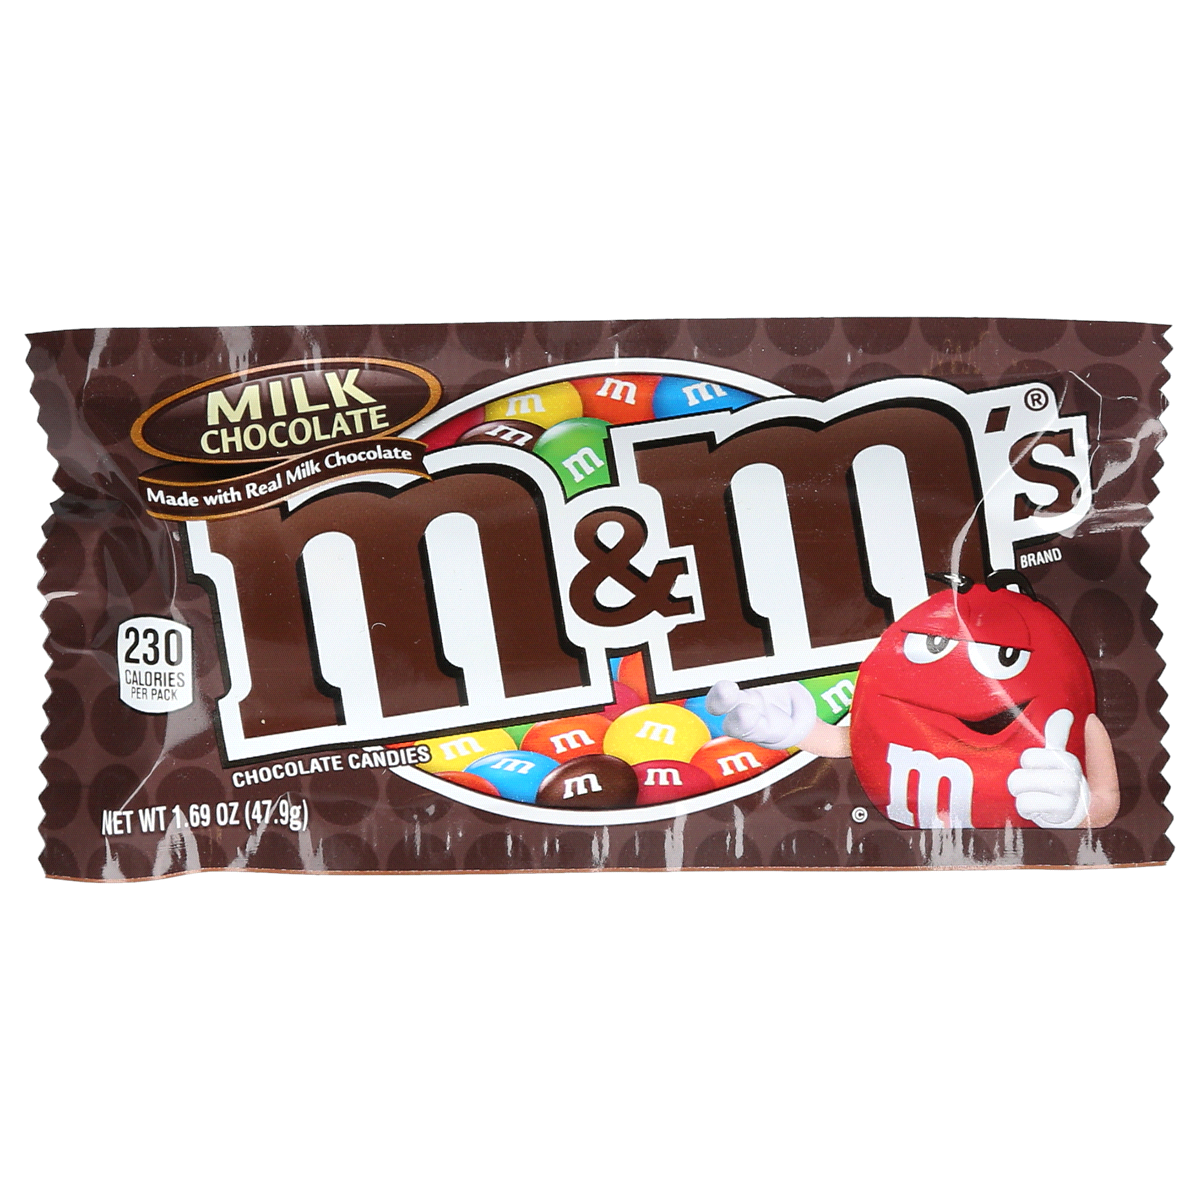 Milk Chocolate M&M'S, 10.0oz | M&M'S